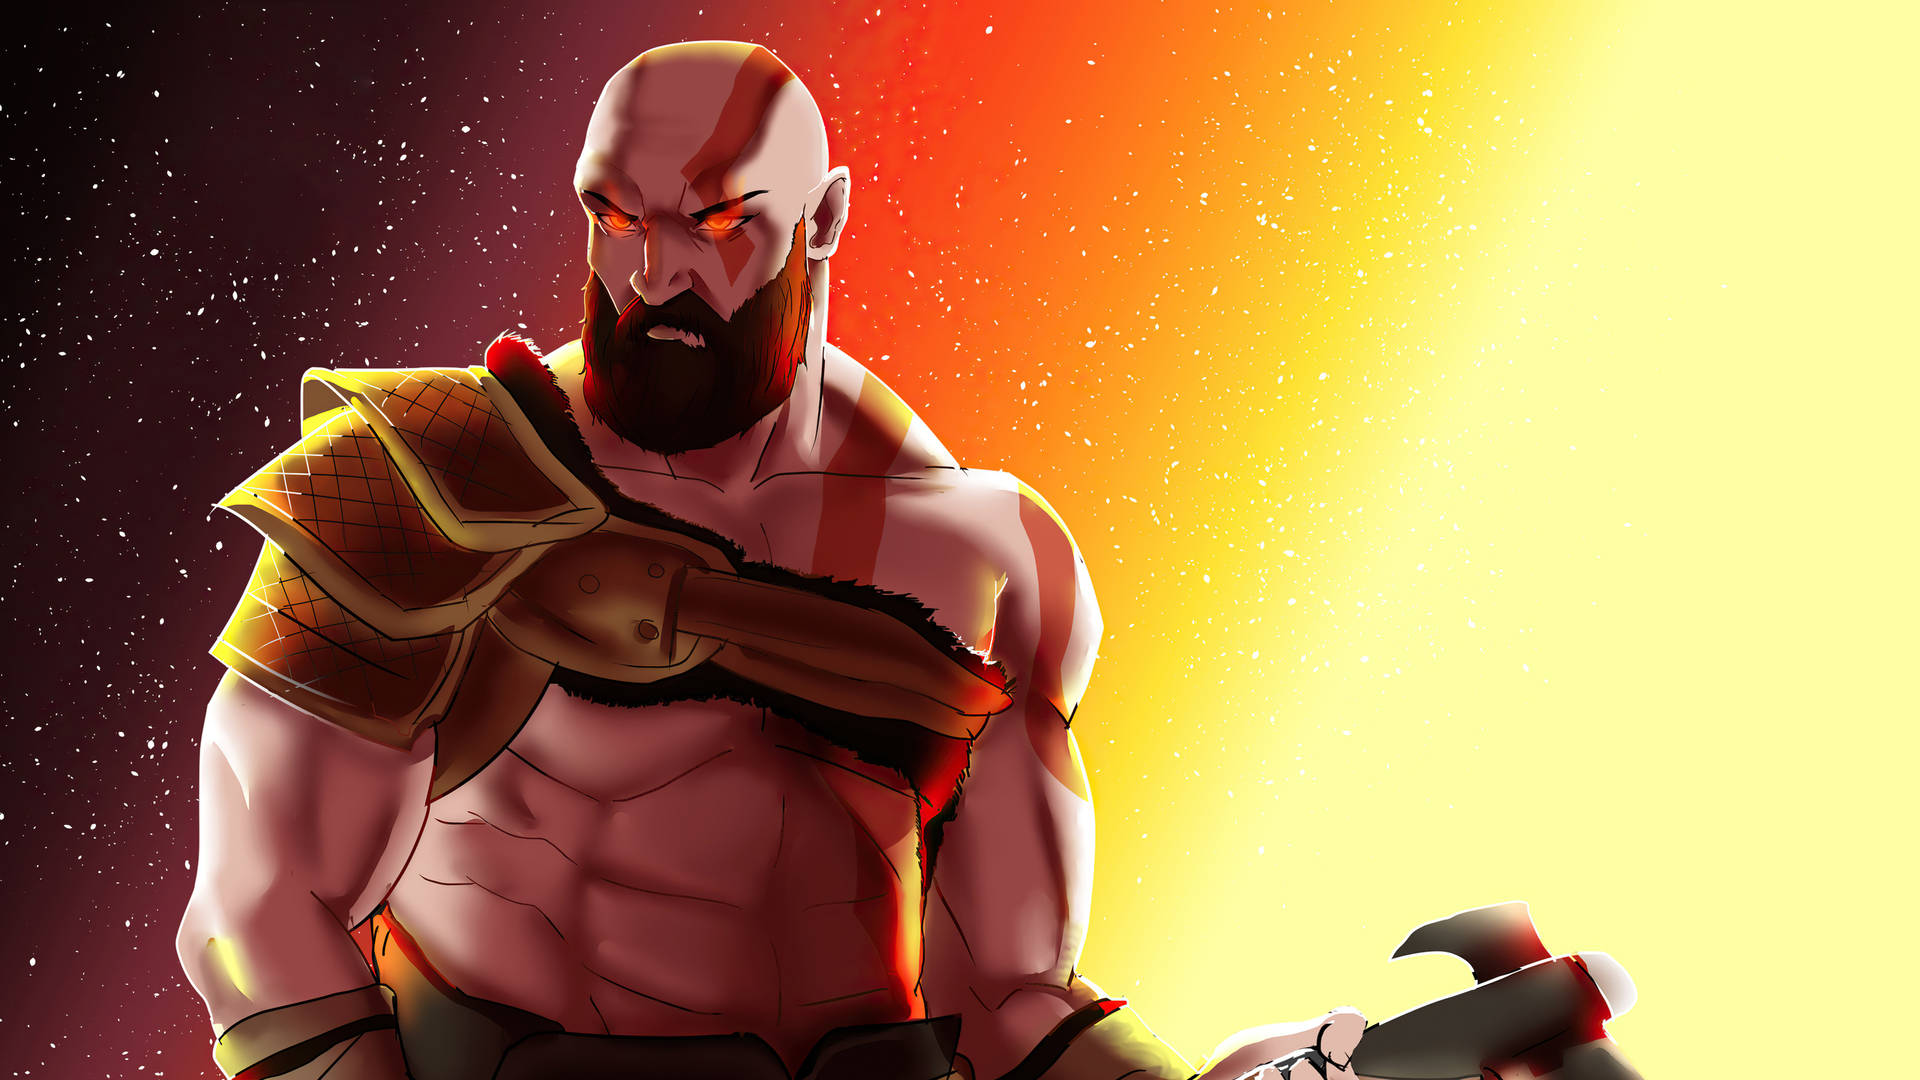 Intimidating Kratos Digital Art Background